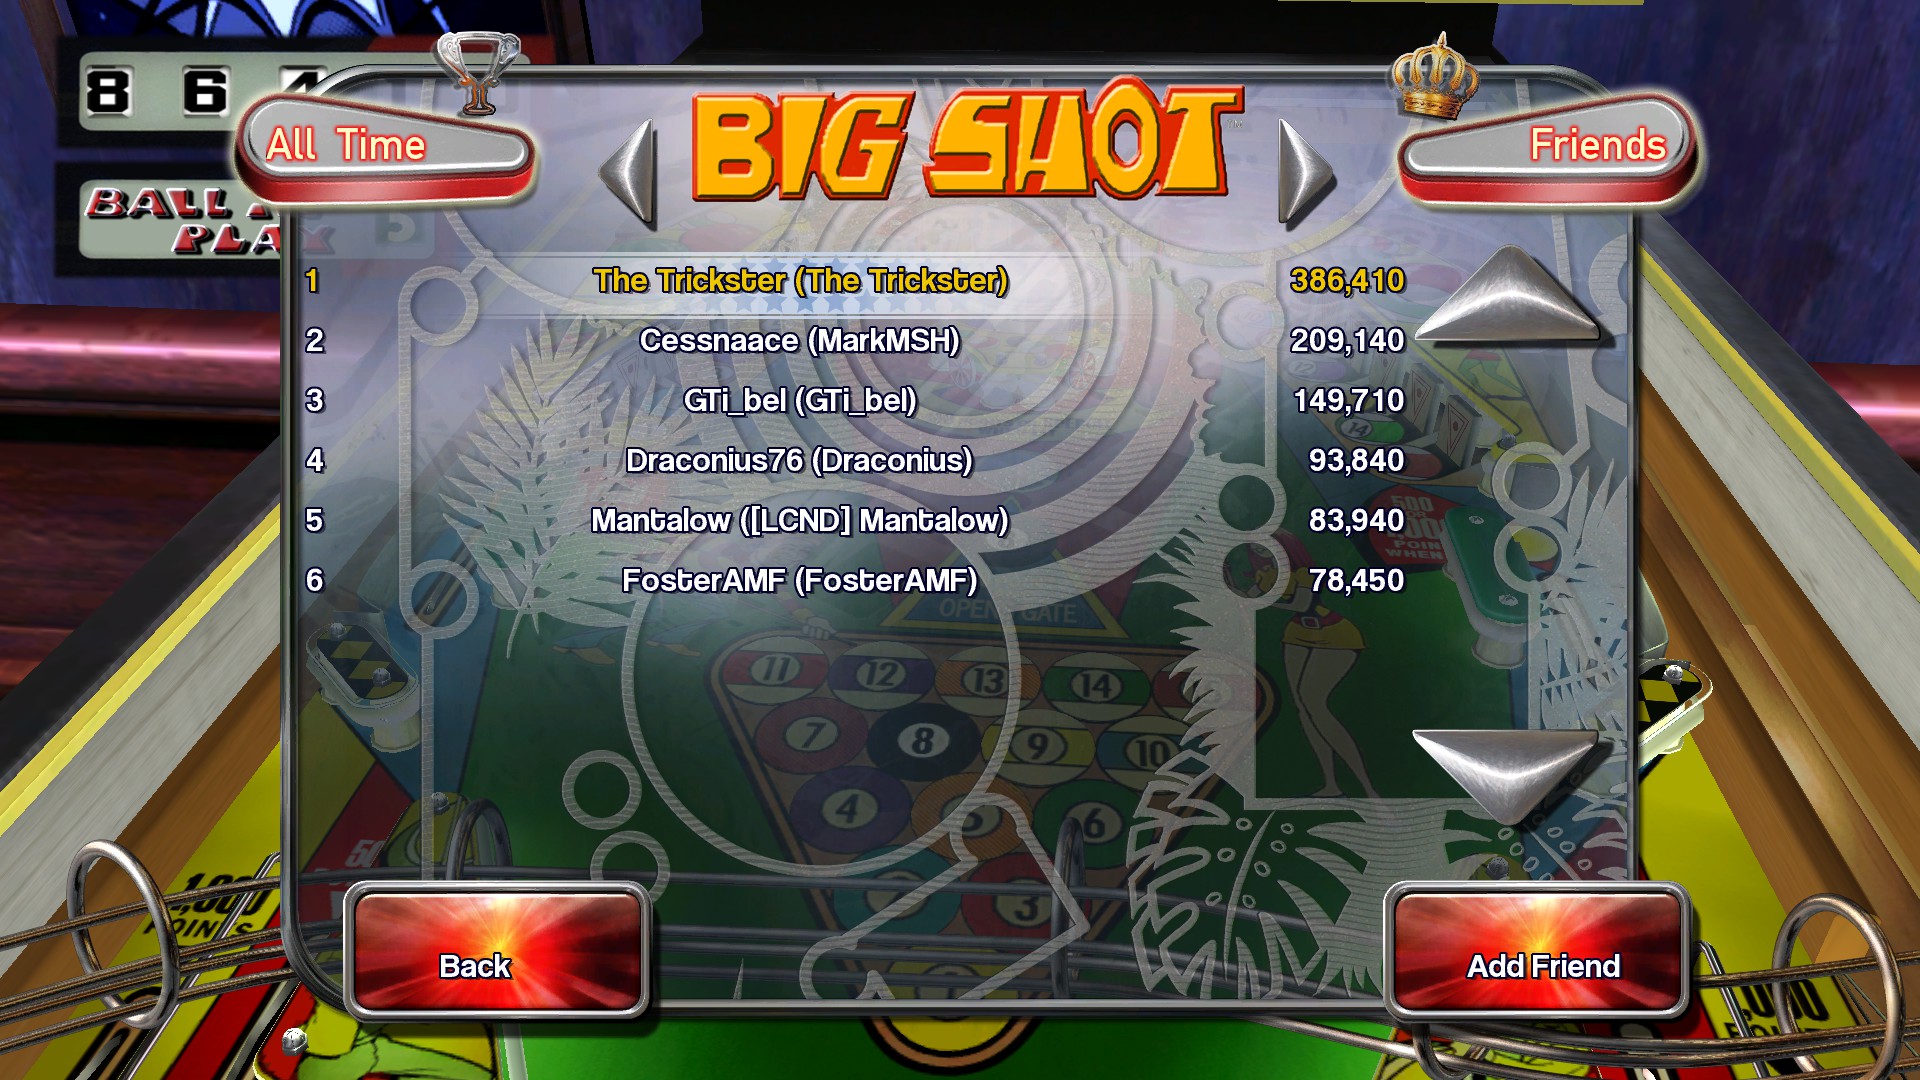 TheTrickster: Pinball Arcade: Big Shot (PC) 386,410 points on 2016-04-08 04:08:47